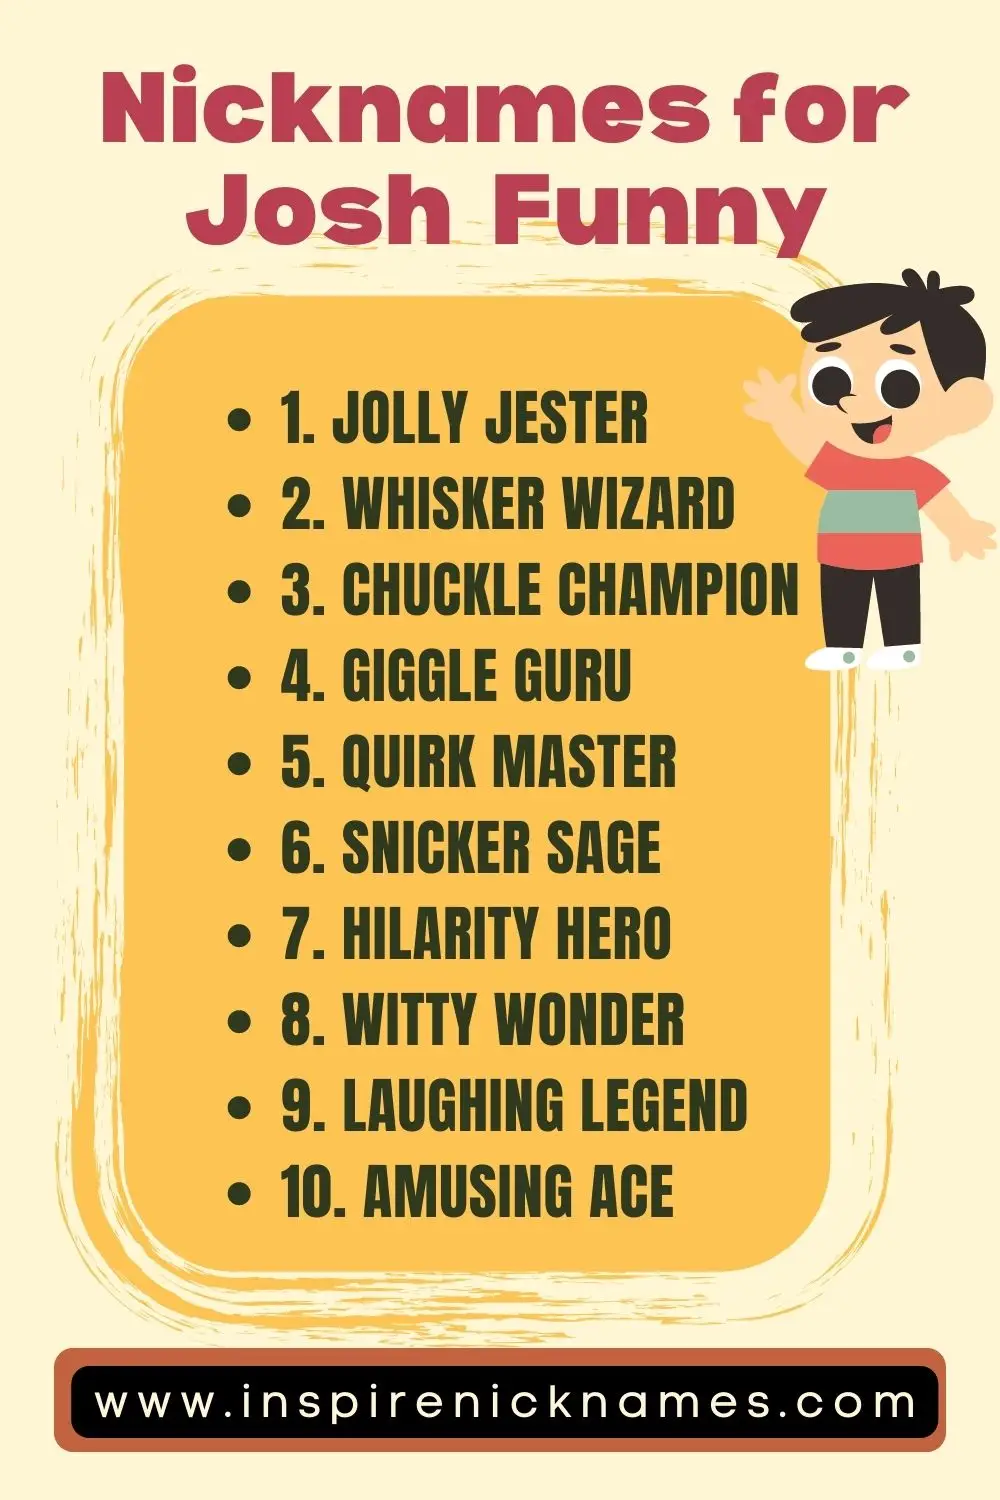 nicknames for josh funny list ideas